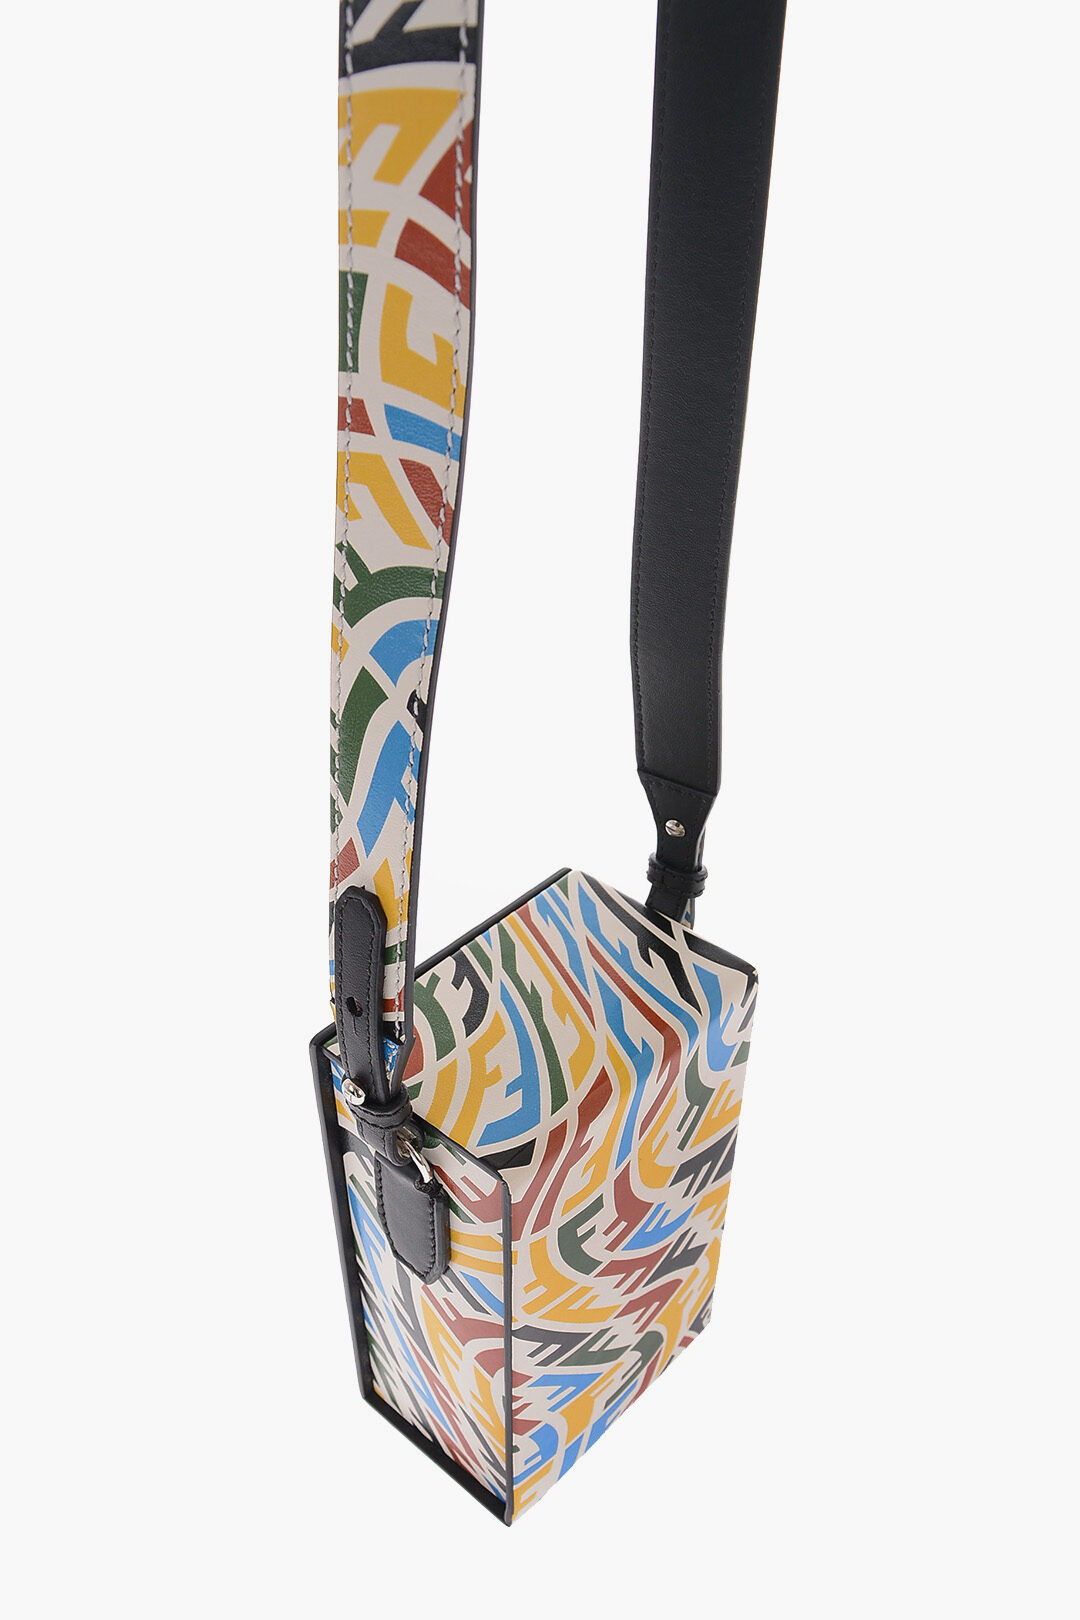 Fendi Bags & Handbags for Women on sale - Outlet | FASHIOLA.co.uk